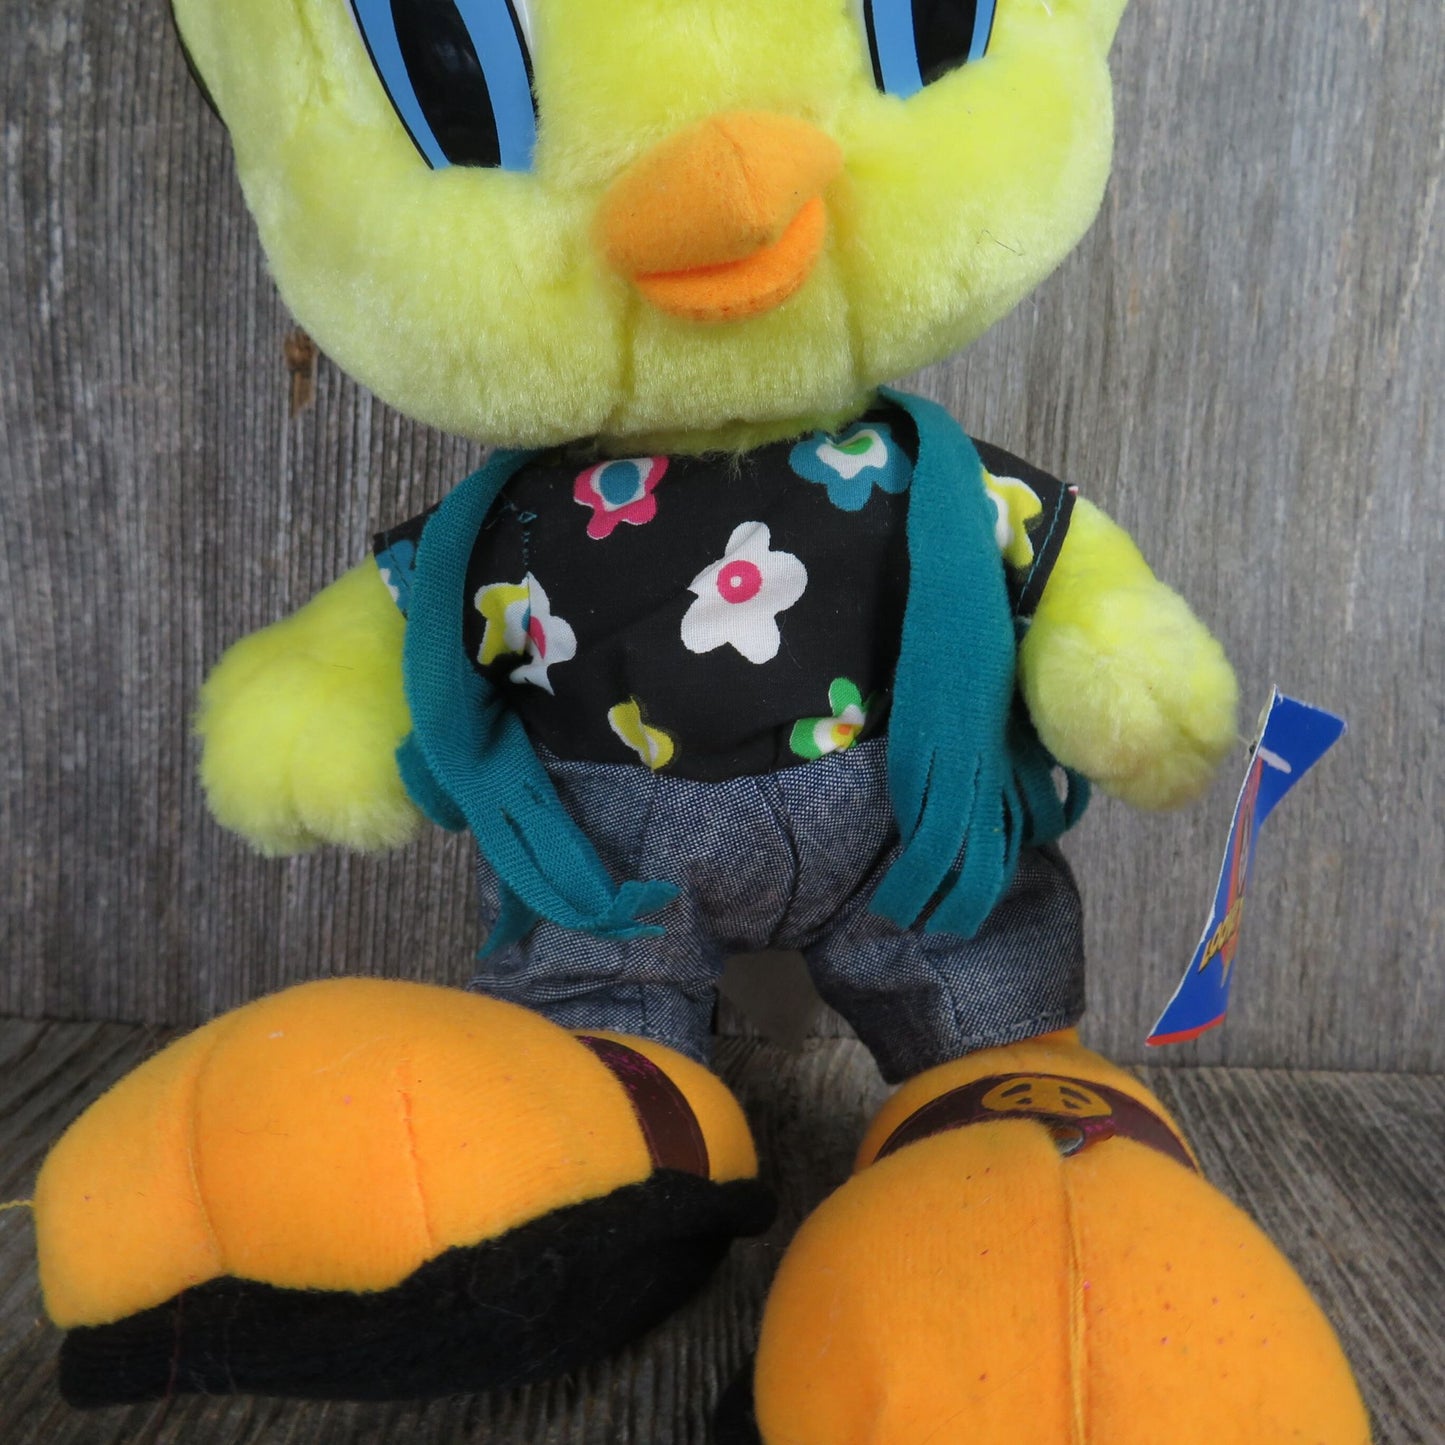 Vintage Tweety Bird Plush Hippy Peace 70s Style Flower Shirt Looney Tunes Warner Brothers Stuffed Animal Play by Play 1998